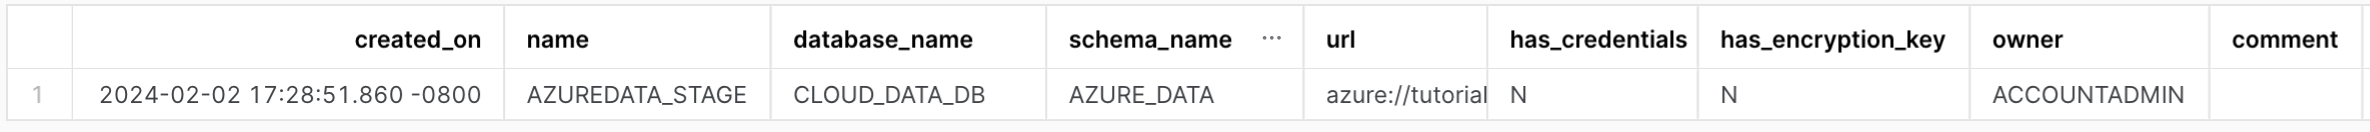 Ausgabe des Befehls SHOW STAGES mit den folgenden Spalten: created_on, name, database_name, schema_name, url.